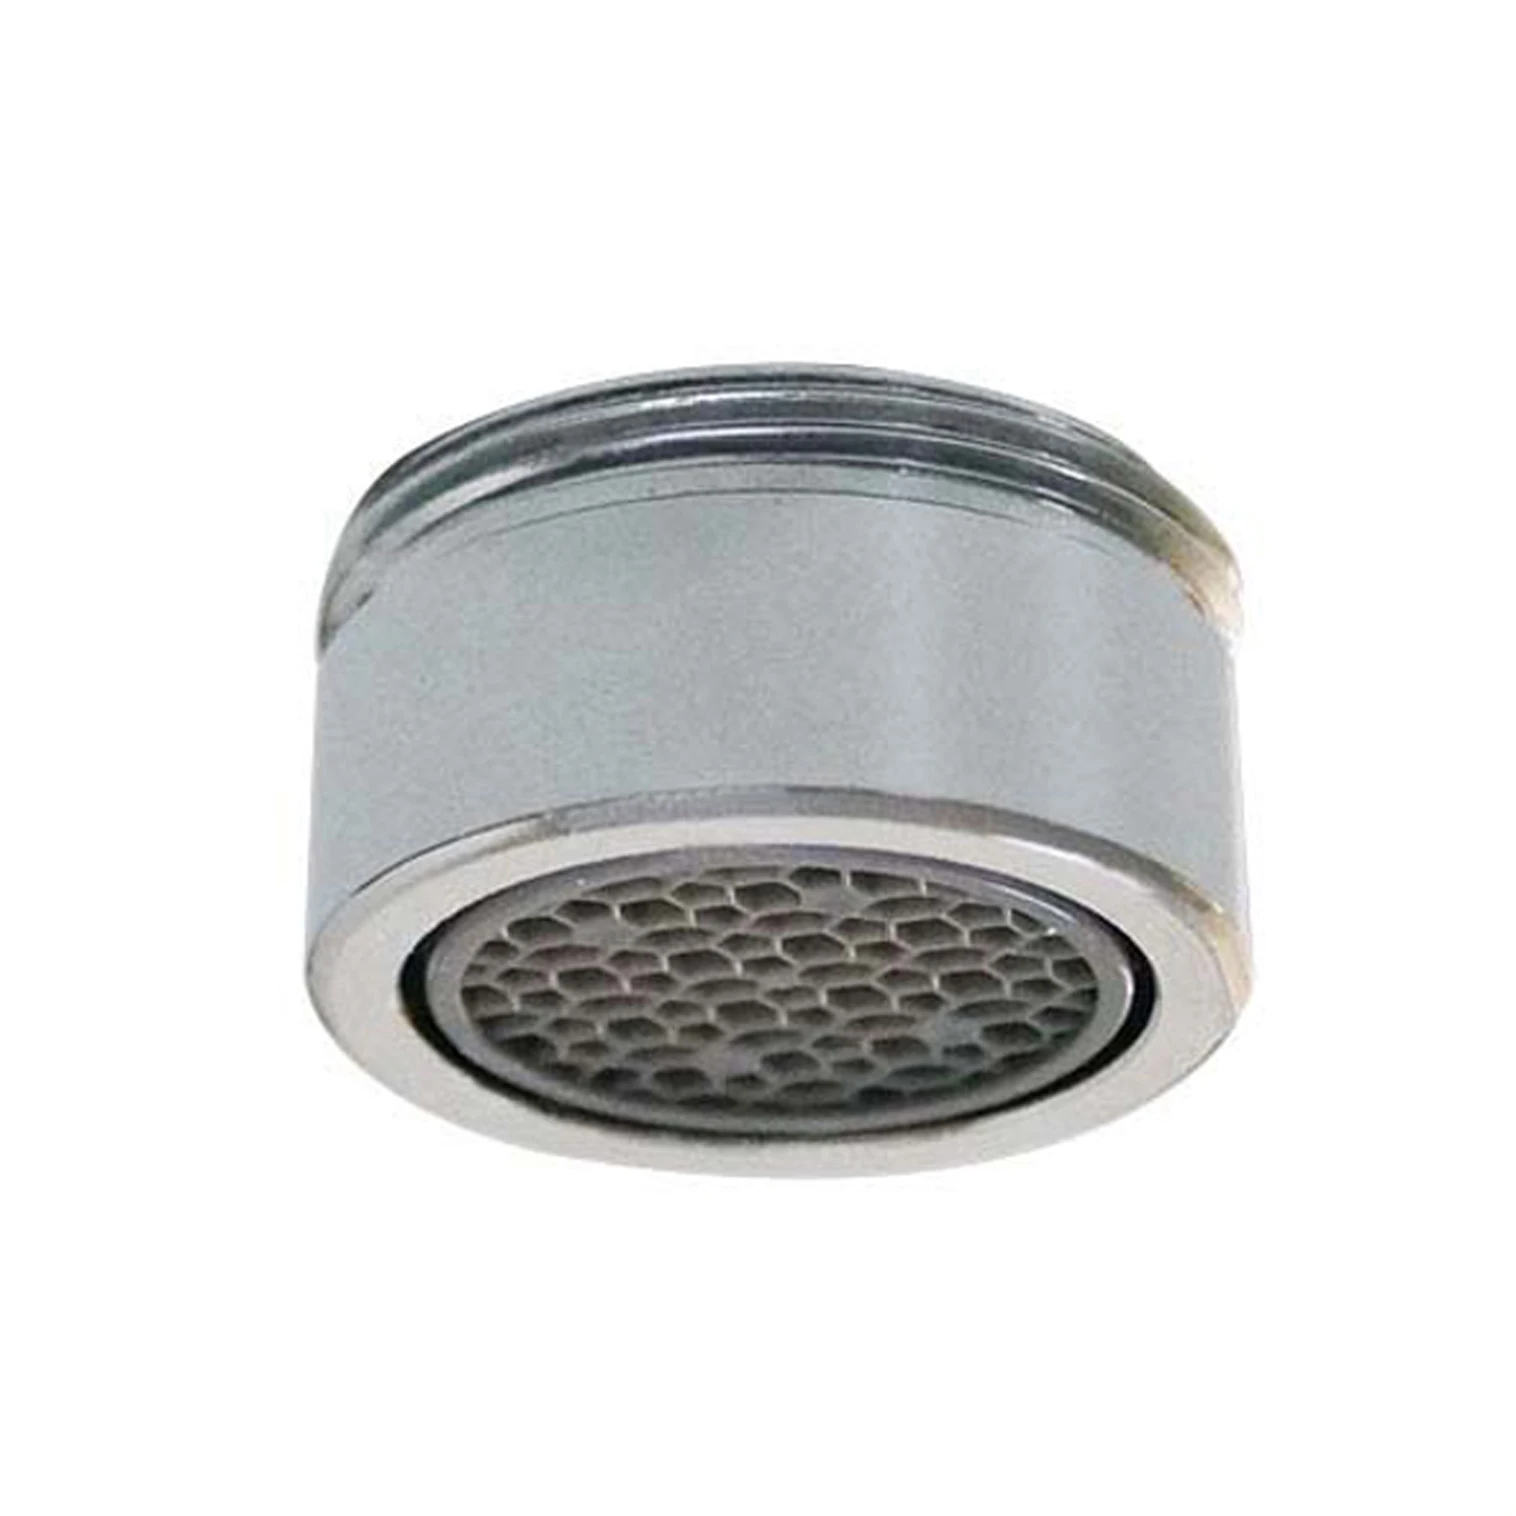 M22/M24 Parts Mixer Tap Fan Sprayer Water Flow Regulate Save Faucet Aerator